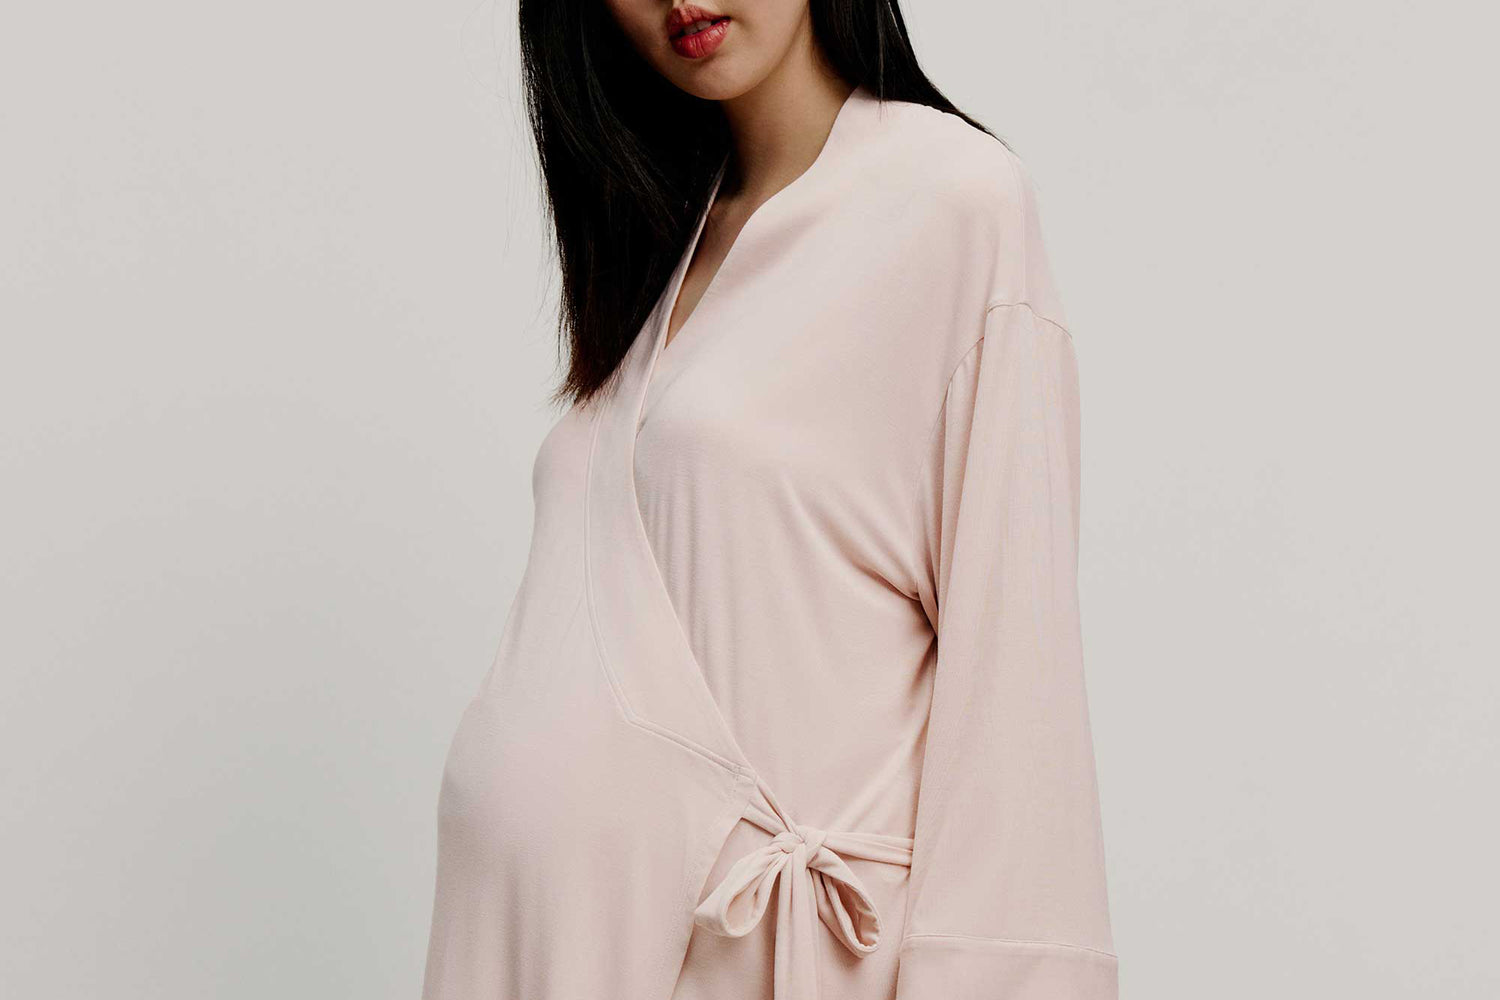 Pregnant woman wearing pink wrap top